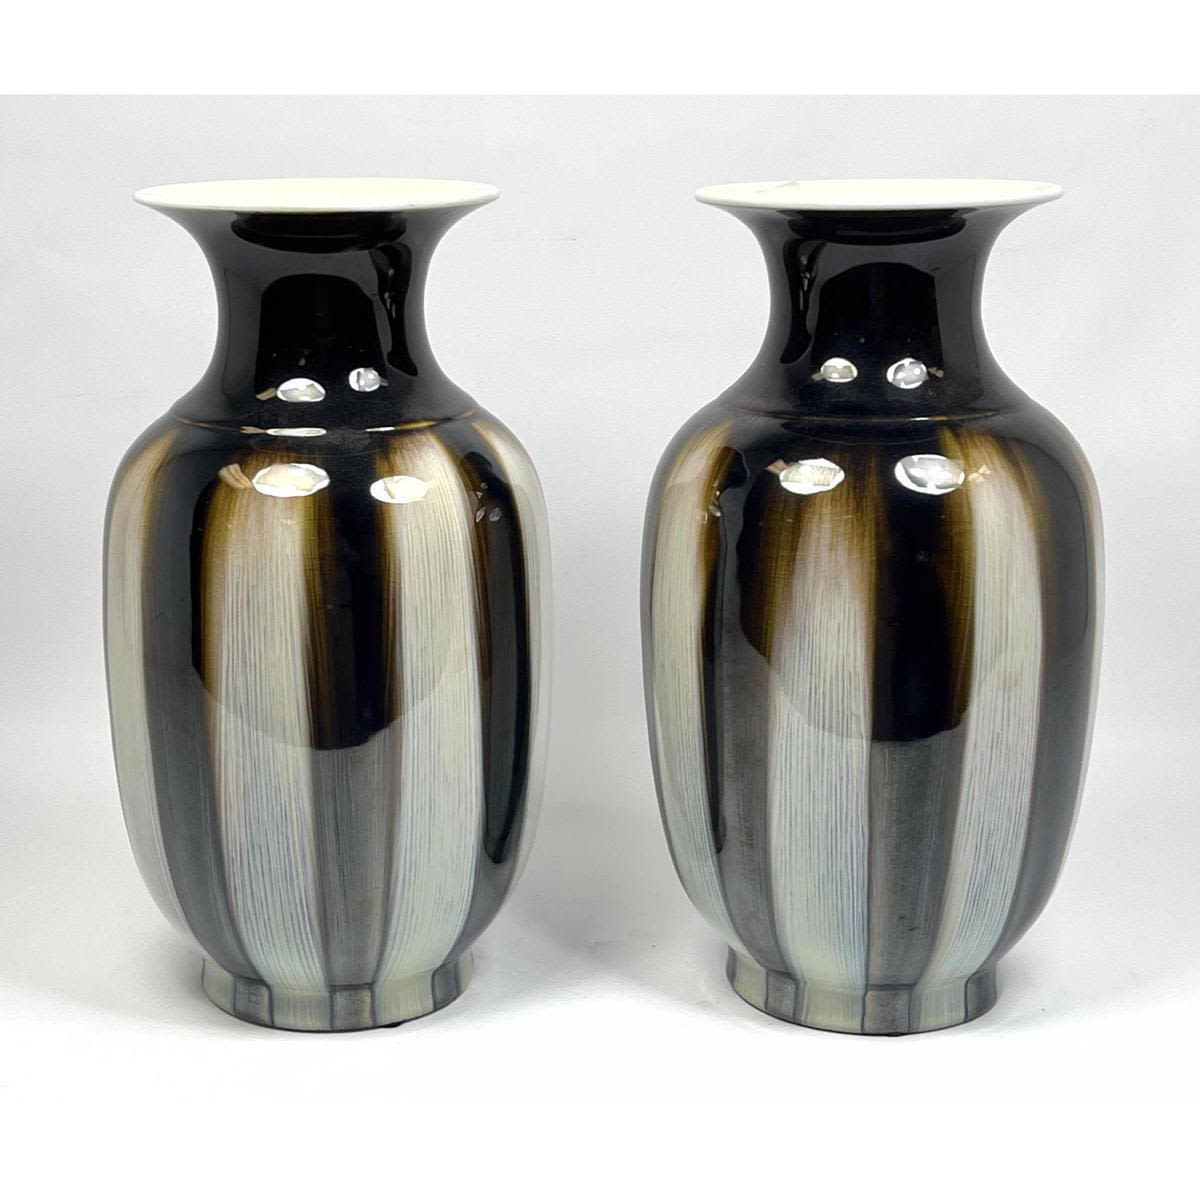 Pr of Maitland Smith porcelain vases